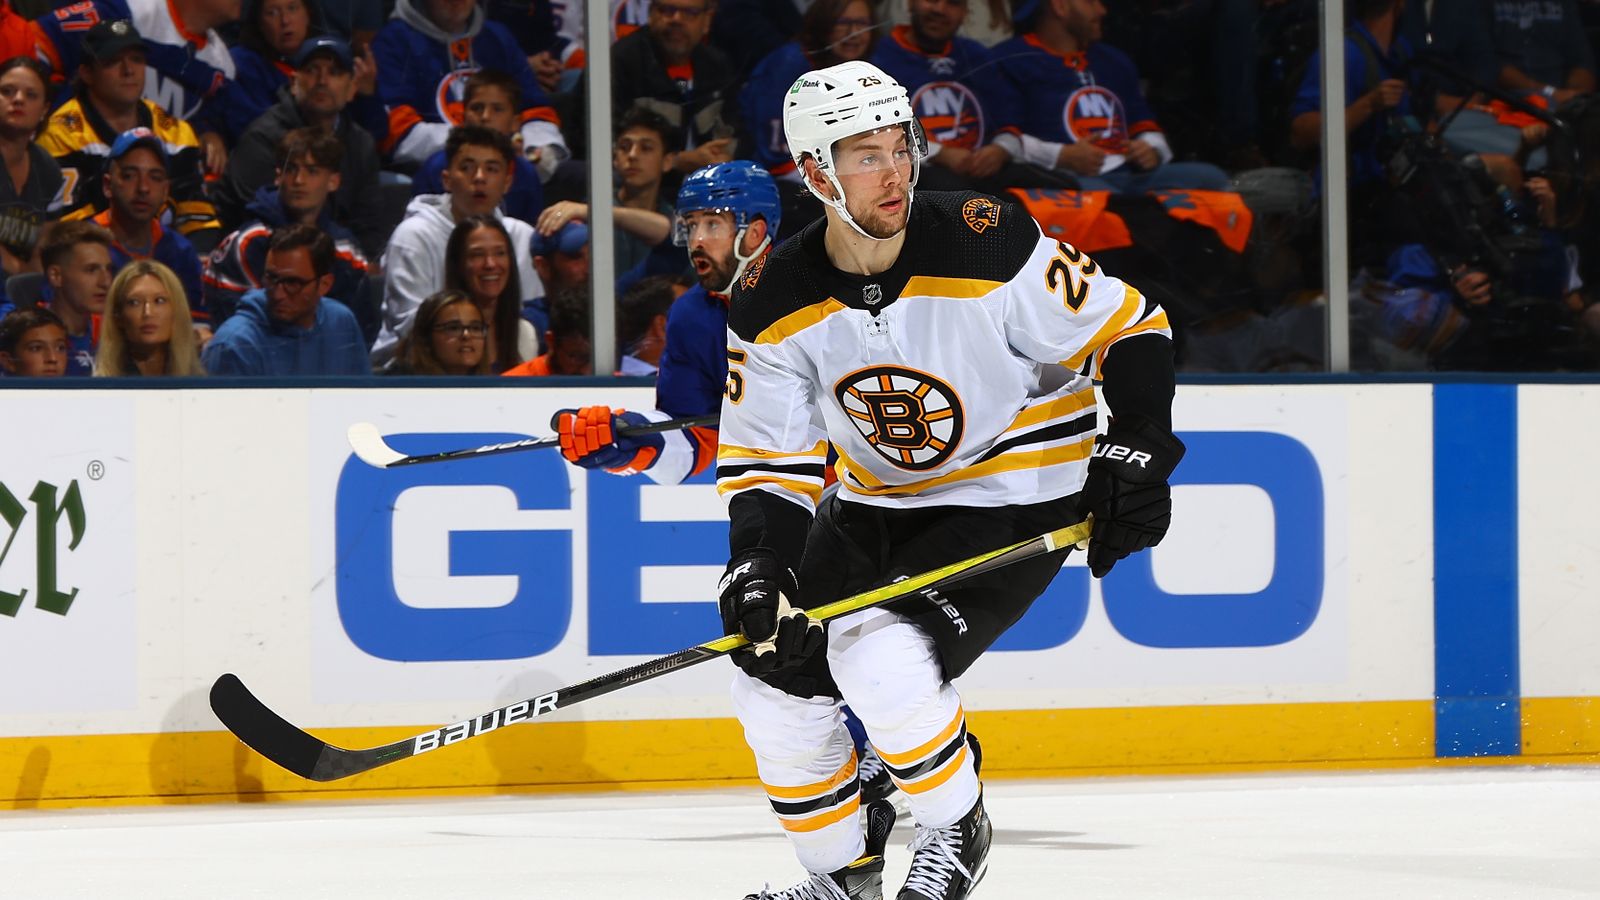 The Boston Bruins has locked up defenceman Brandon Carlo long-term